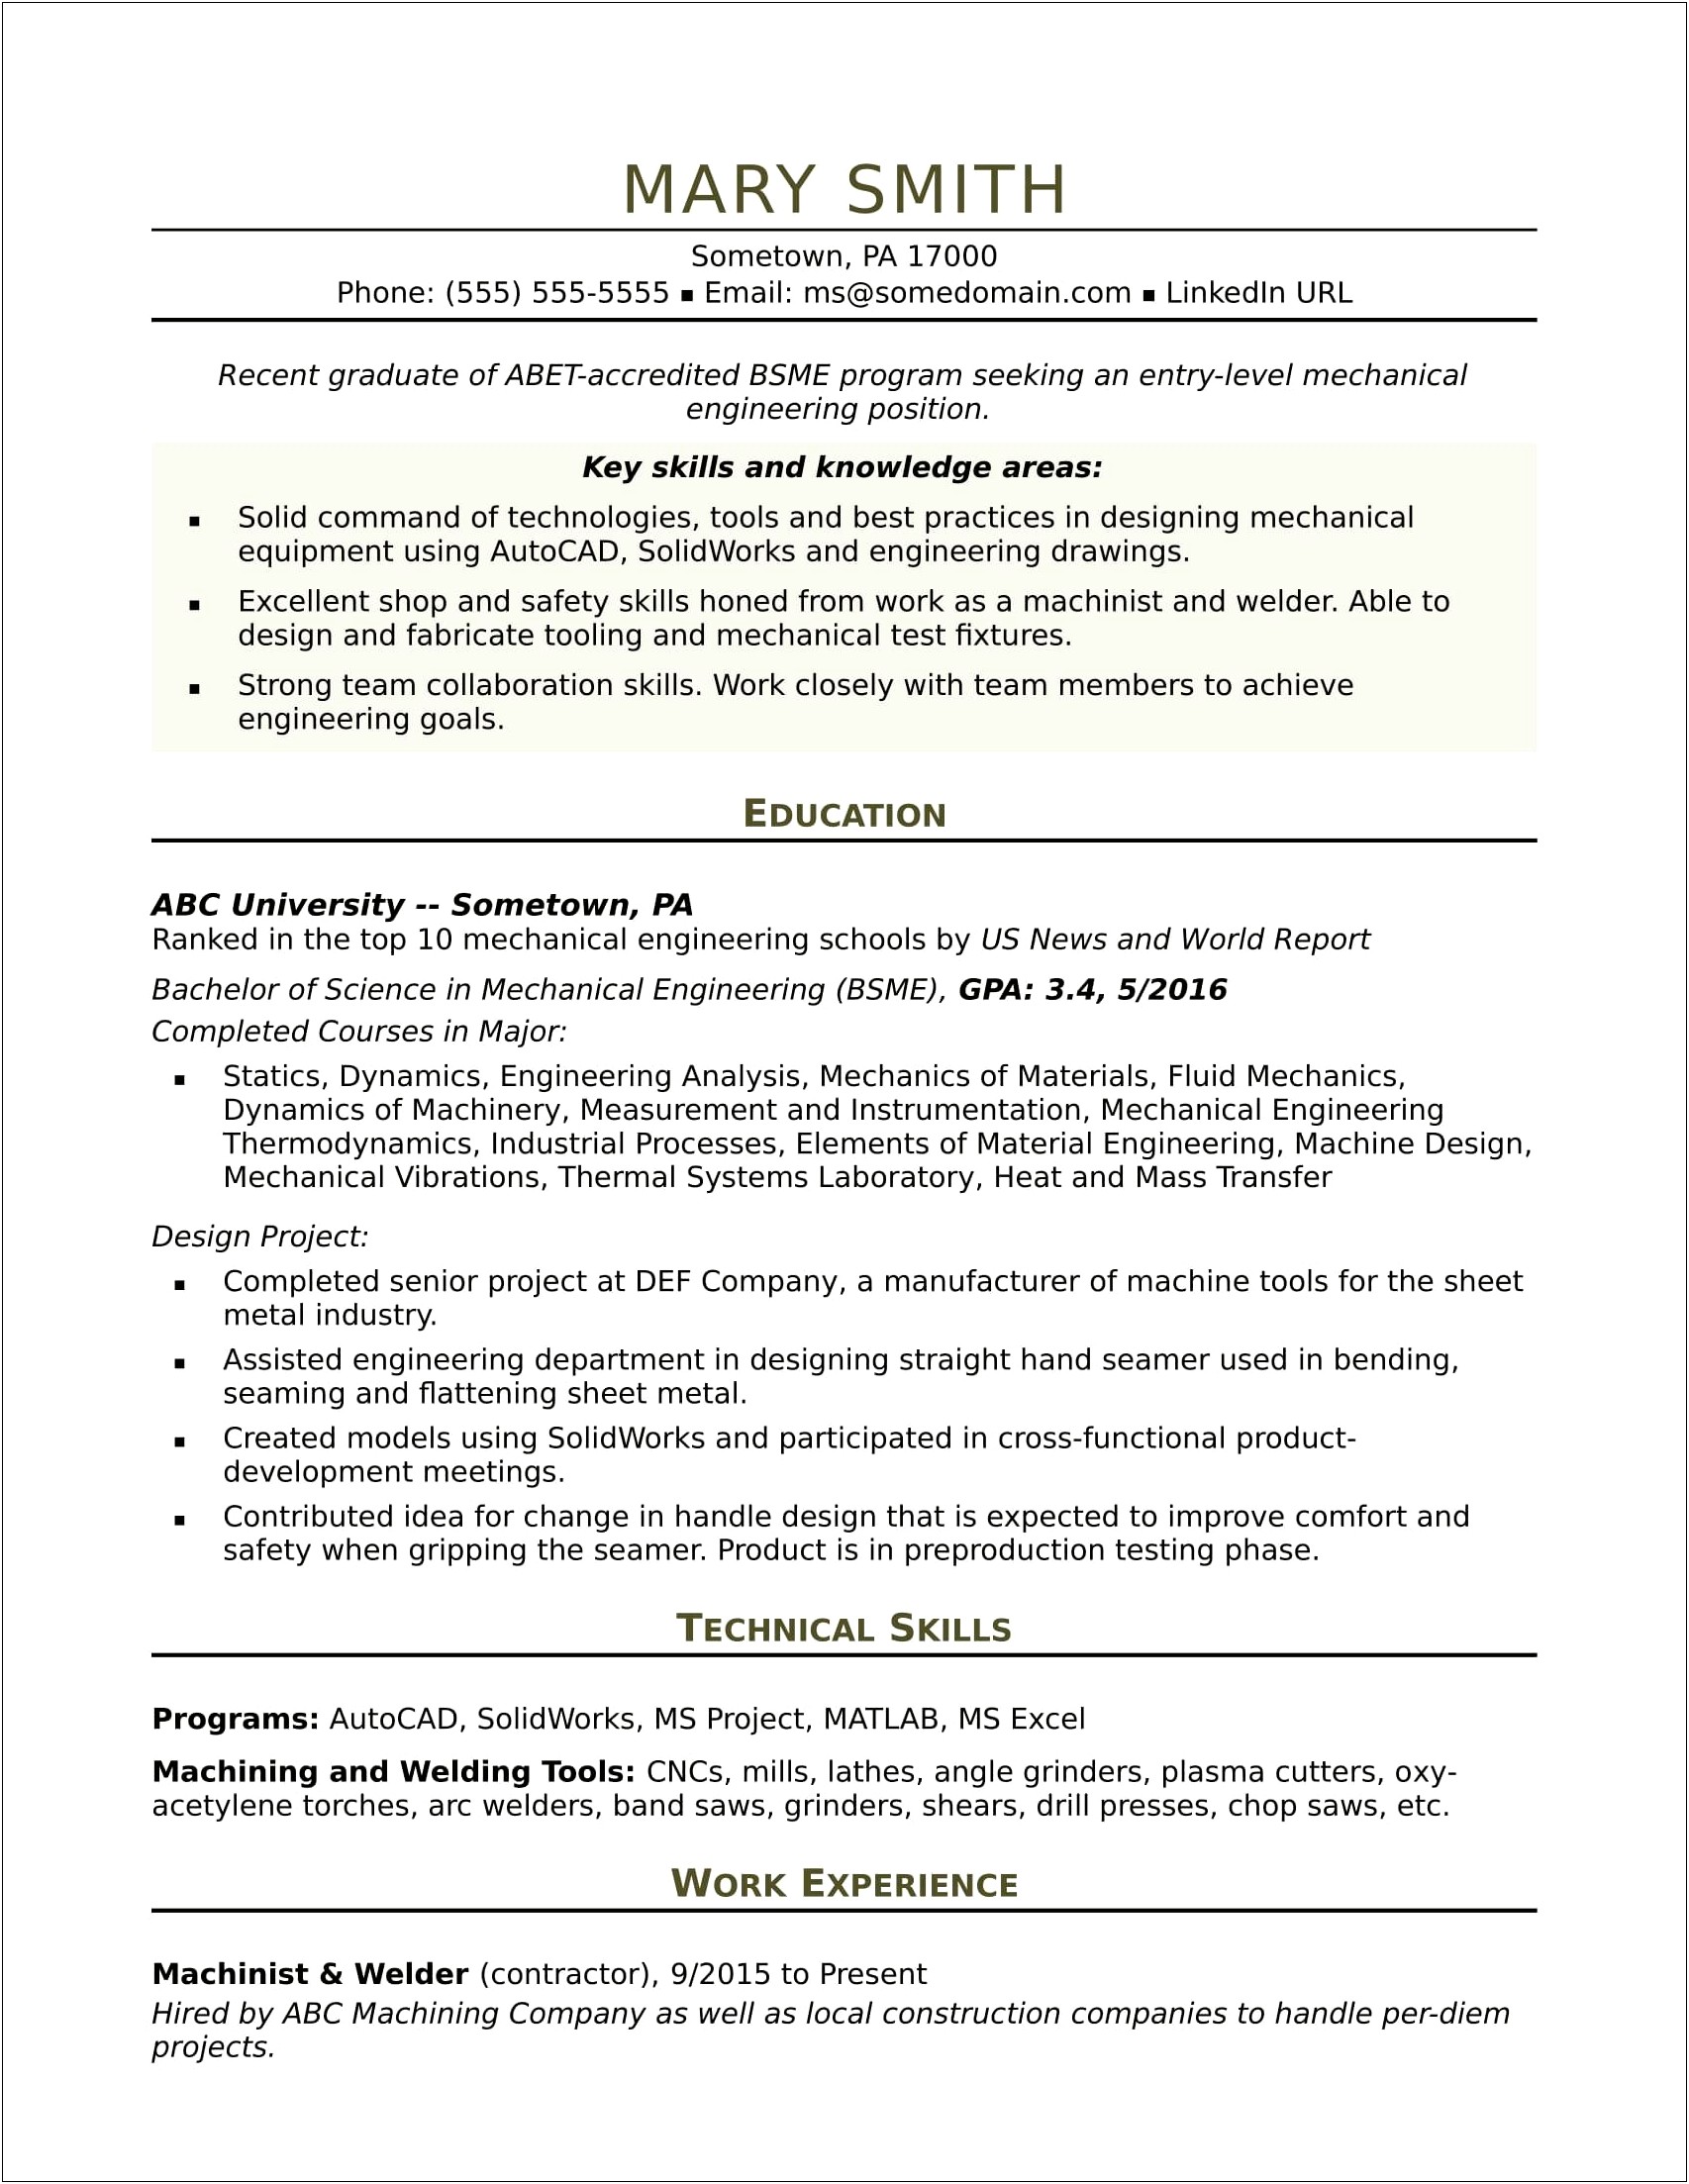 Resume Objective Mechanical Engineering Internship